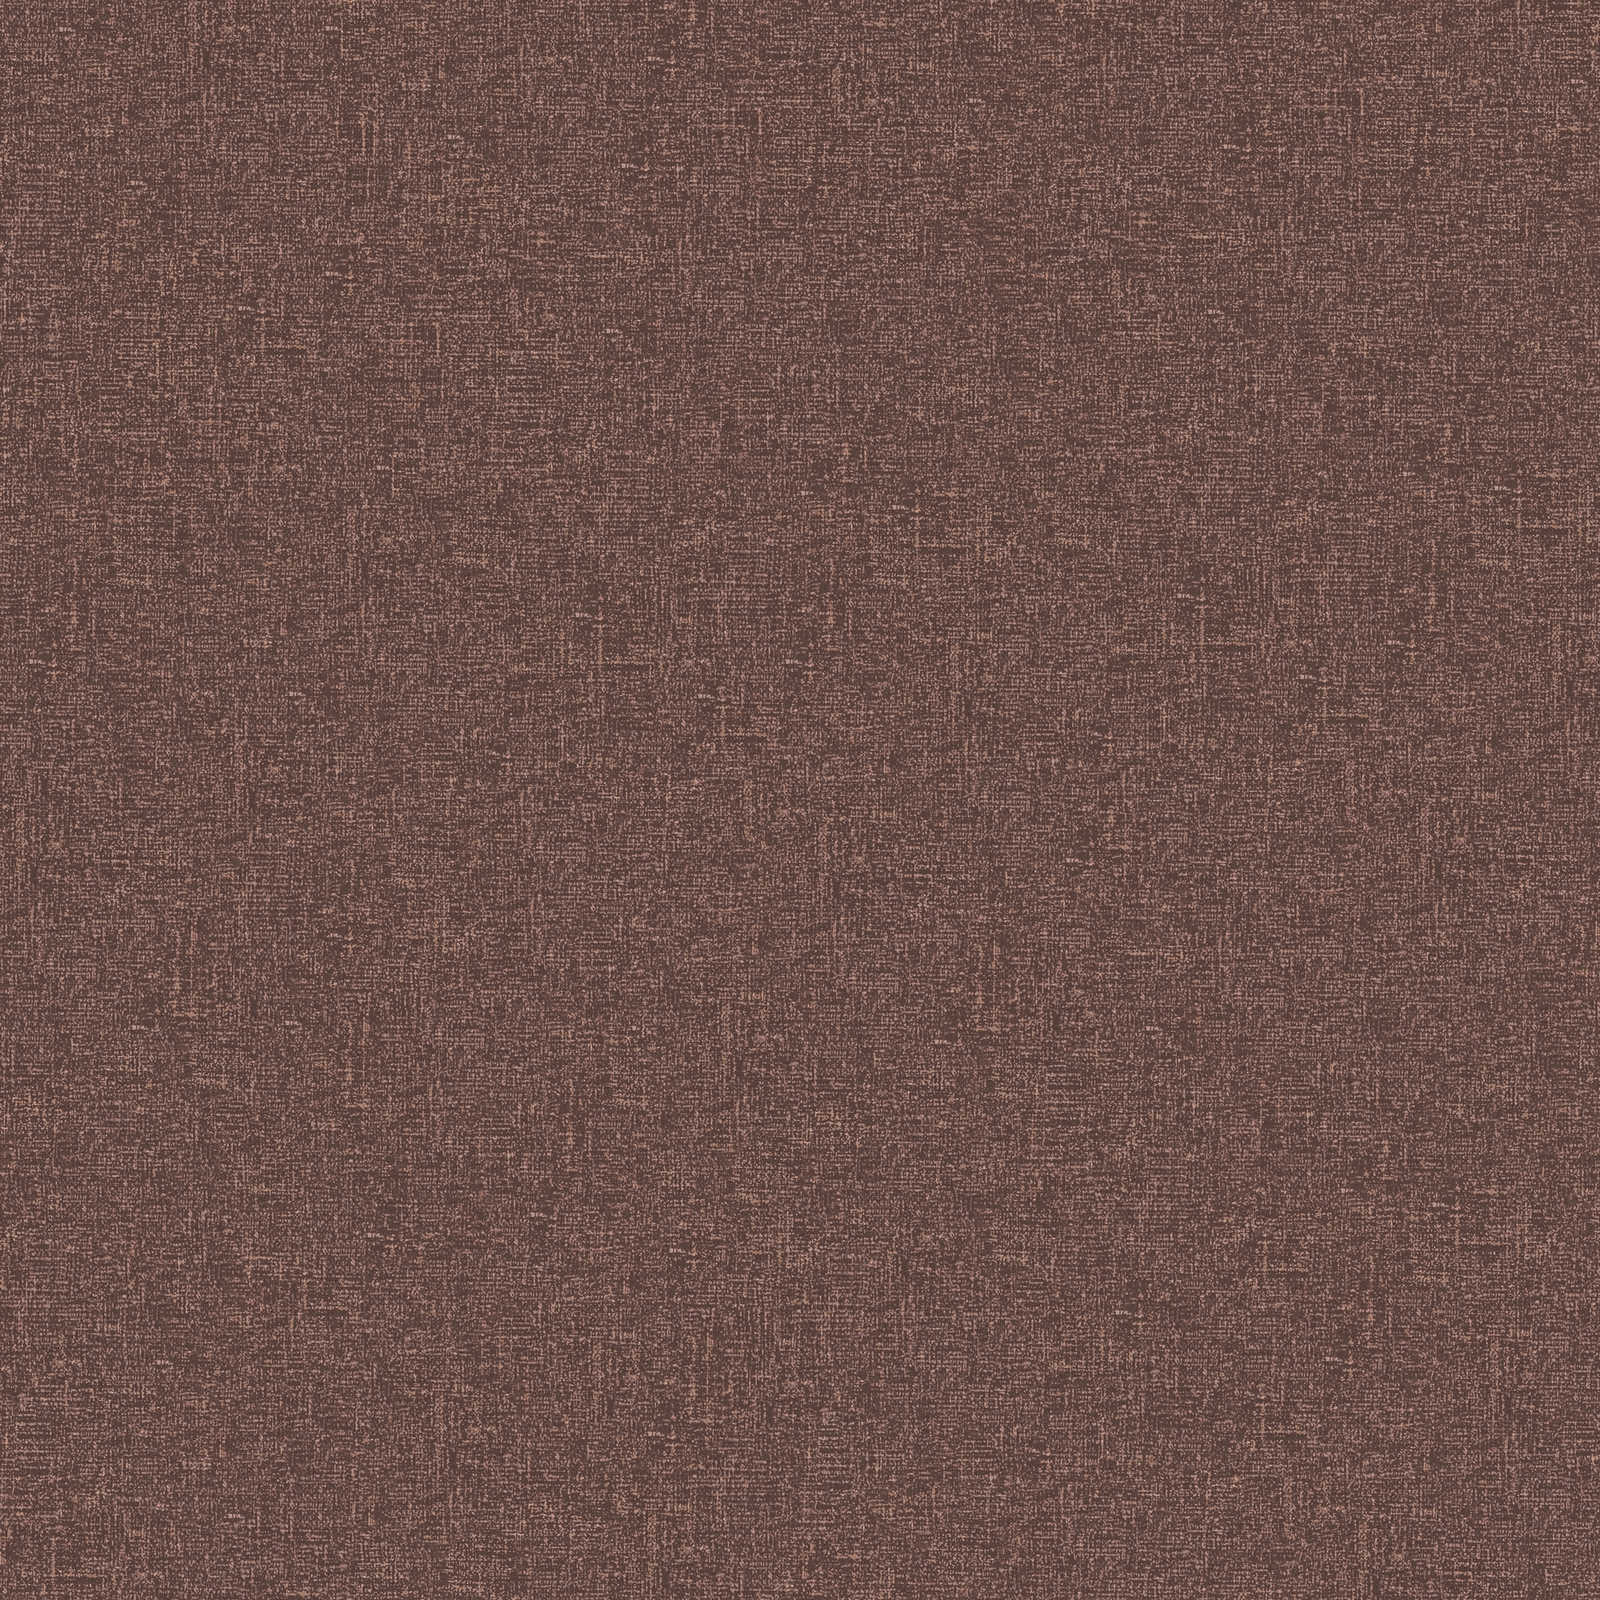 Melange wallpaper in textile look, textured - brown
